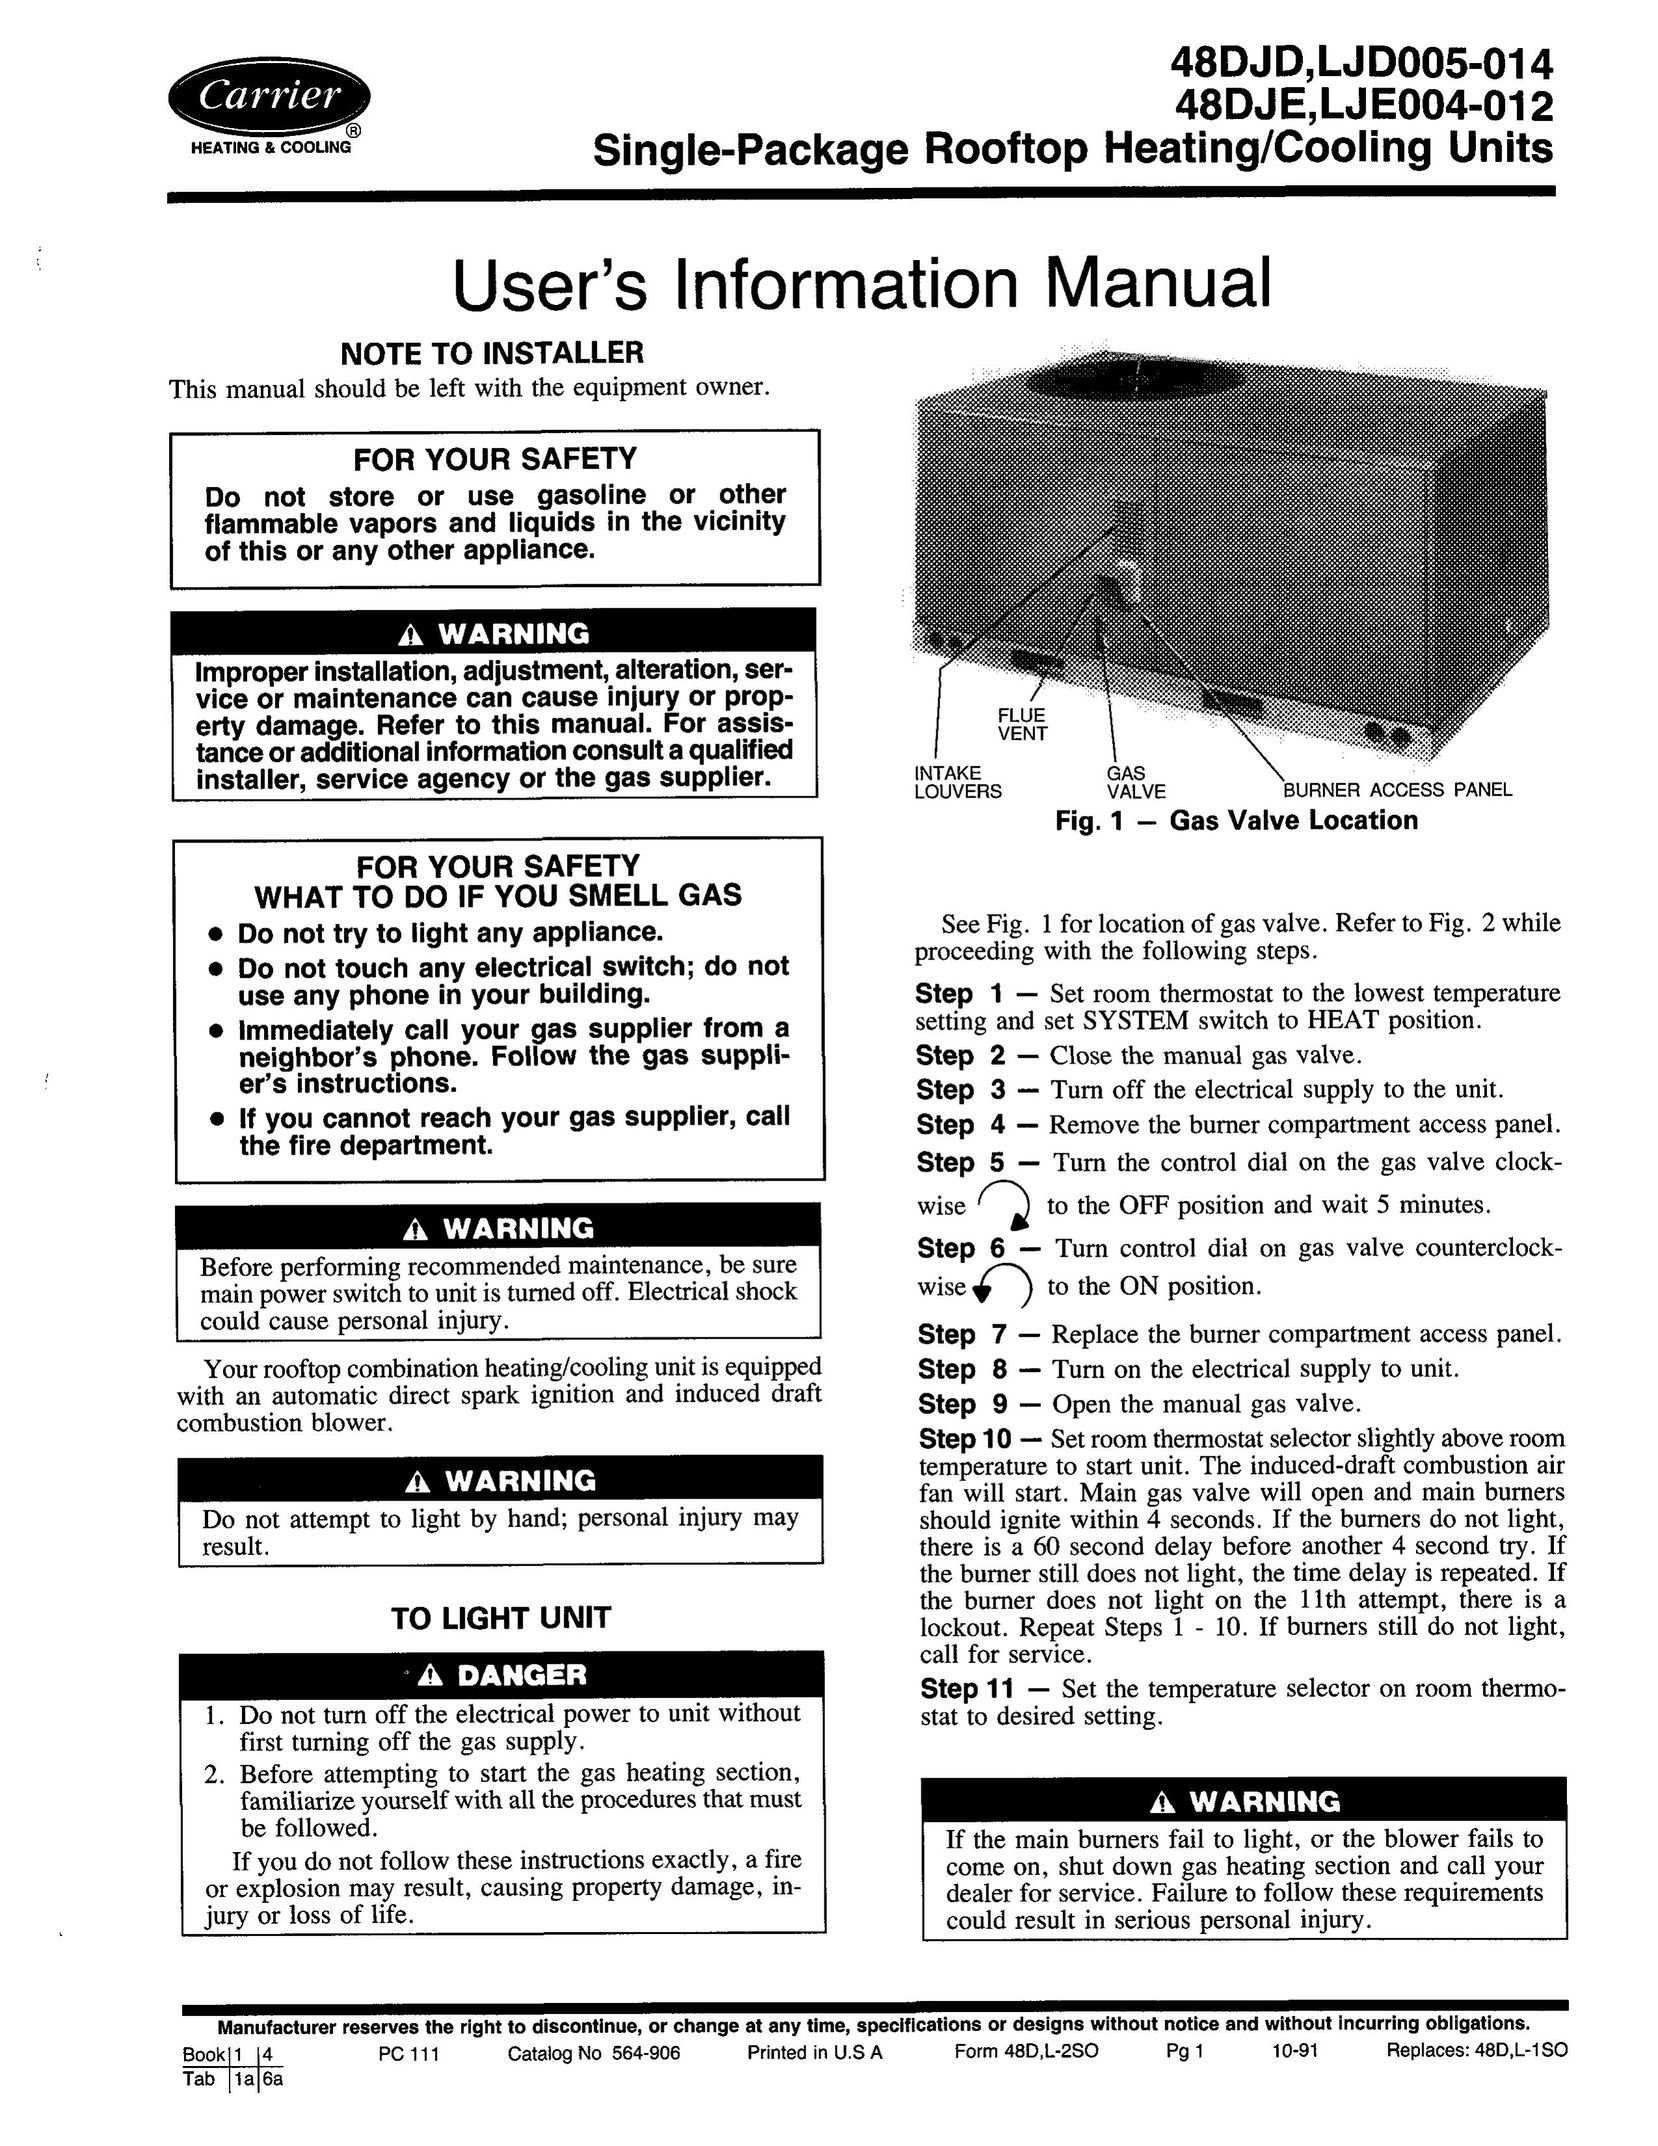 Carrier 48DJD Heating System User Manual